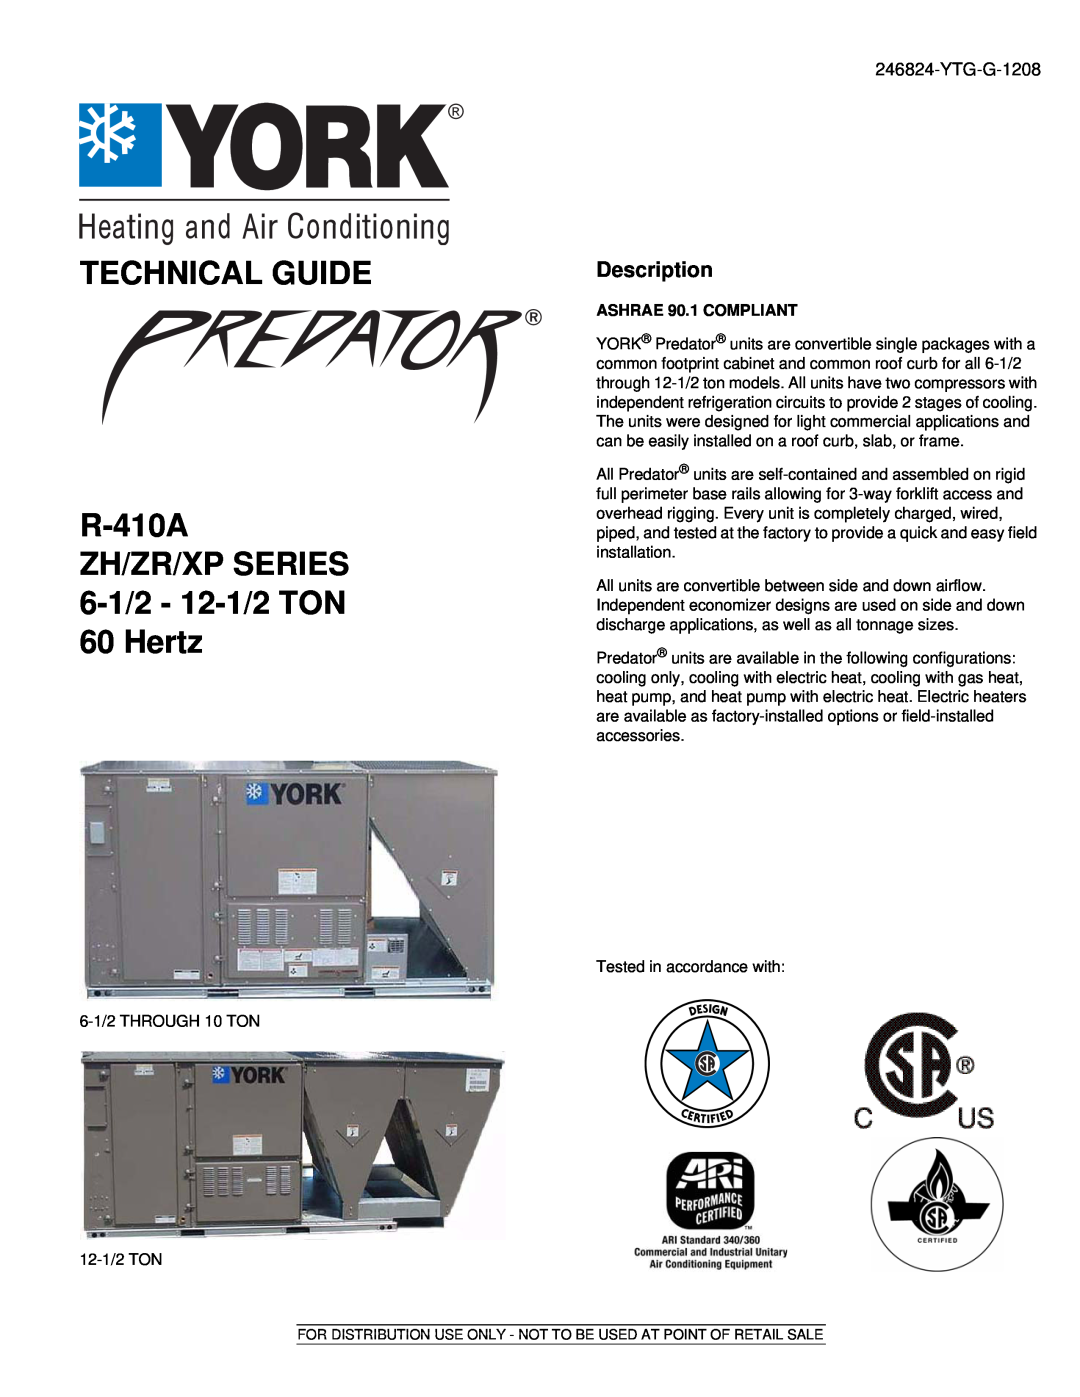 York manual Description, TECHNICAL GUIDE R-410A ZF SERIES 6-1/2- 12-1/2TON, Hertz, YTG-F-1210 